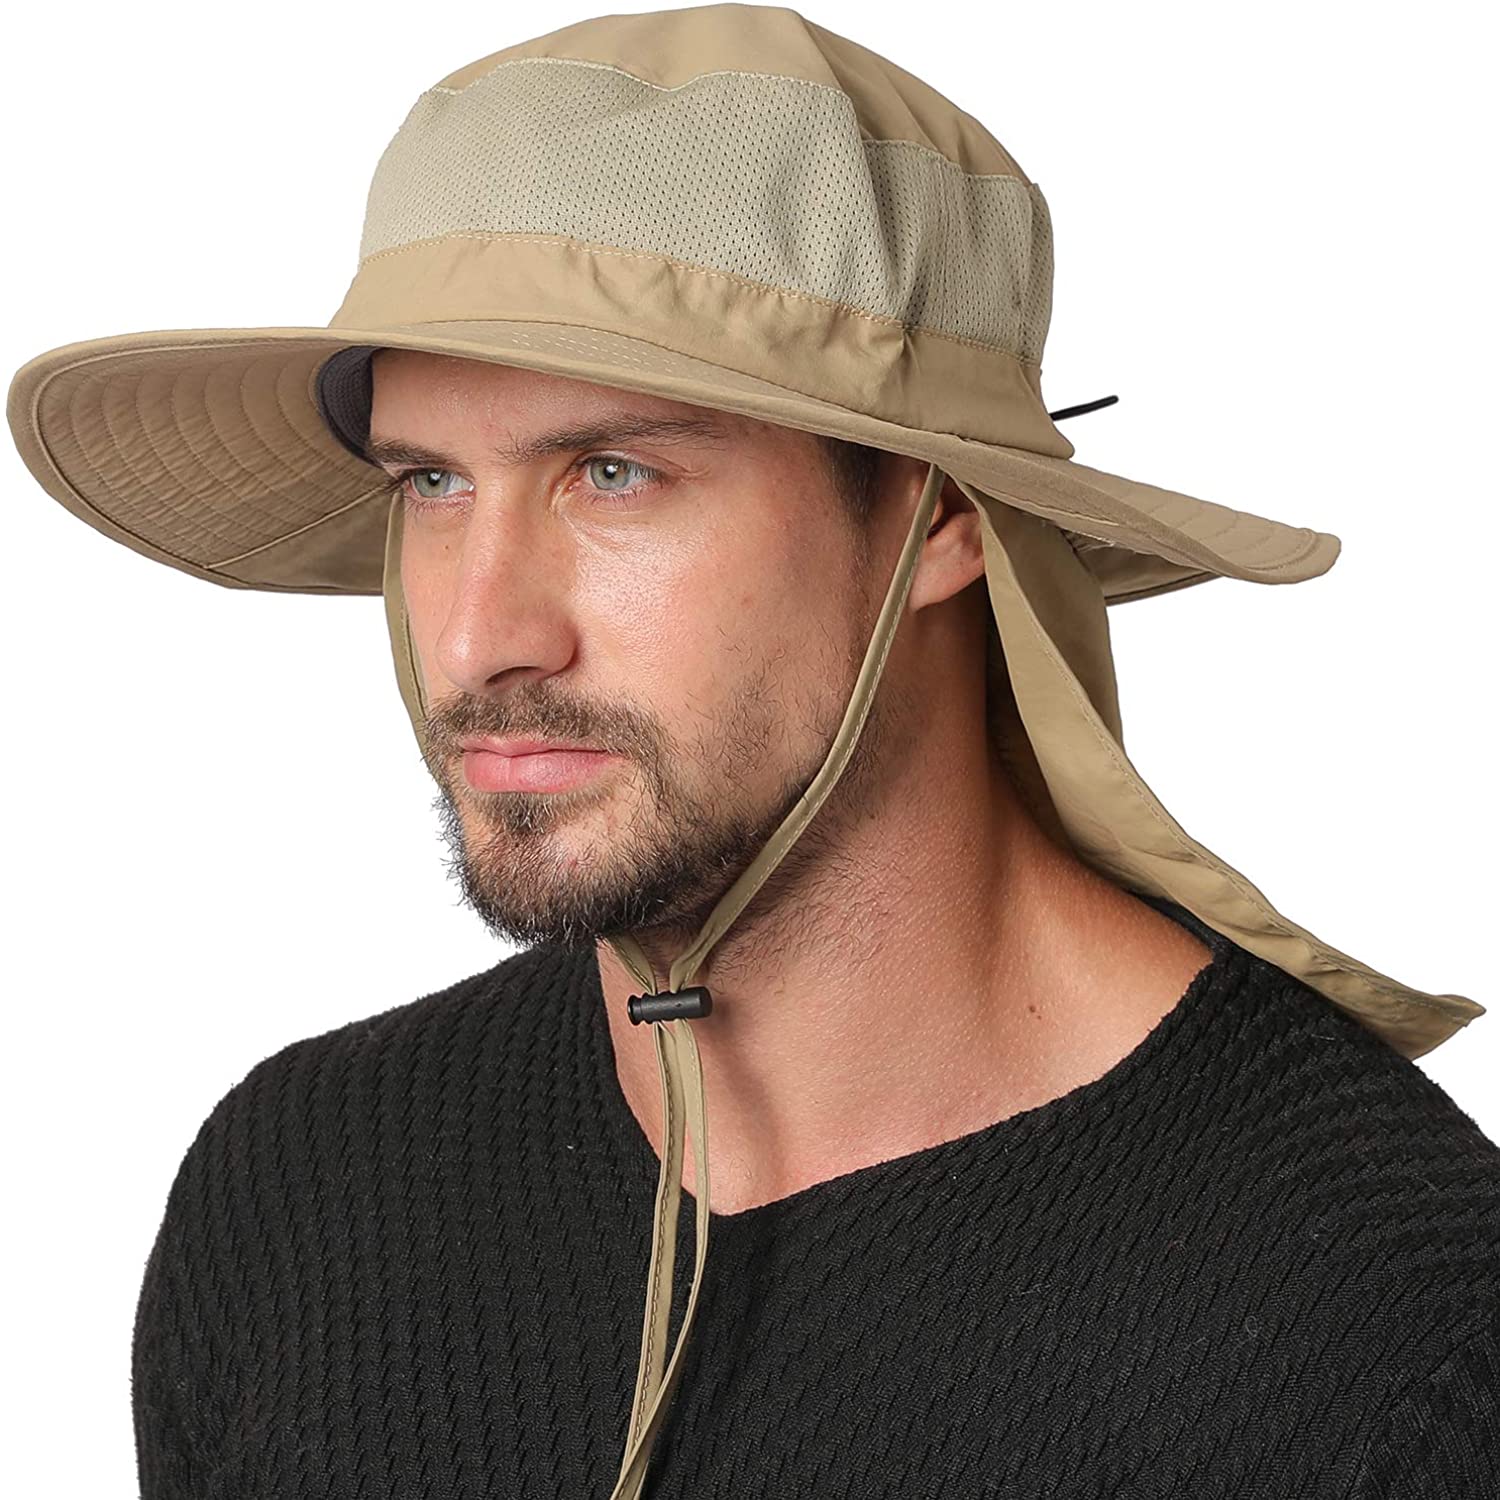 Jormatt Unisex Sun Hat with Neck Flap Cover Fishing Safari Cap Neck  Protection,U